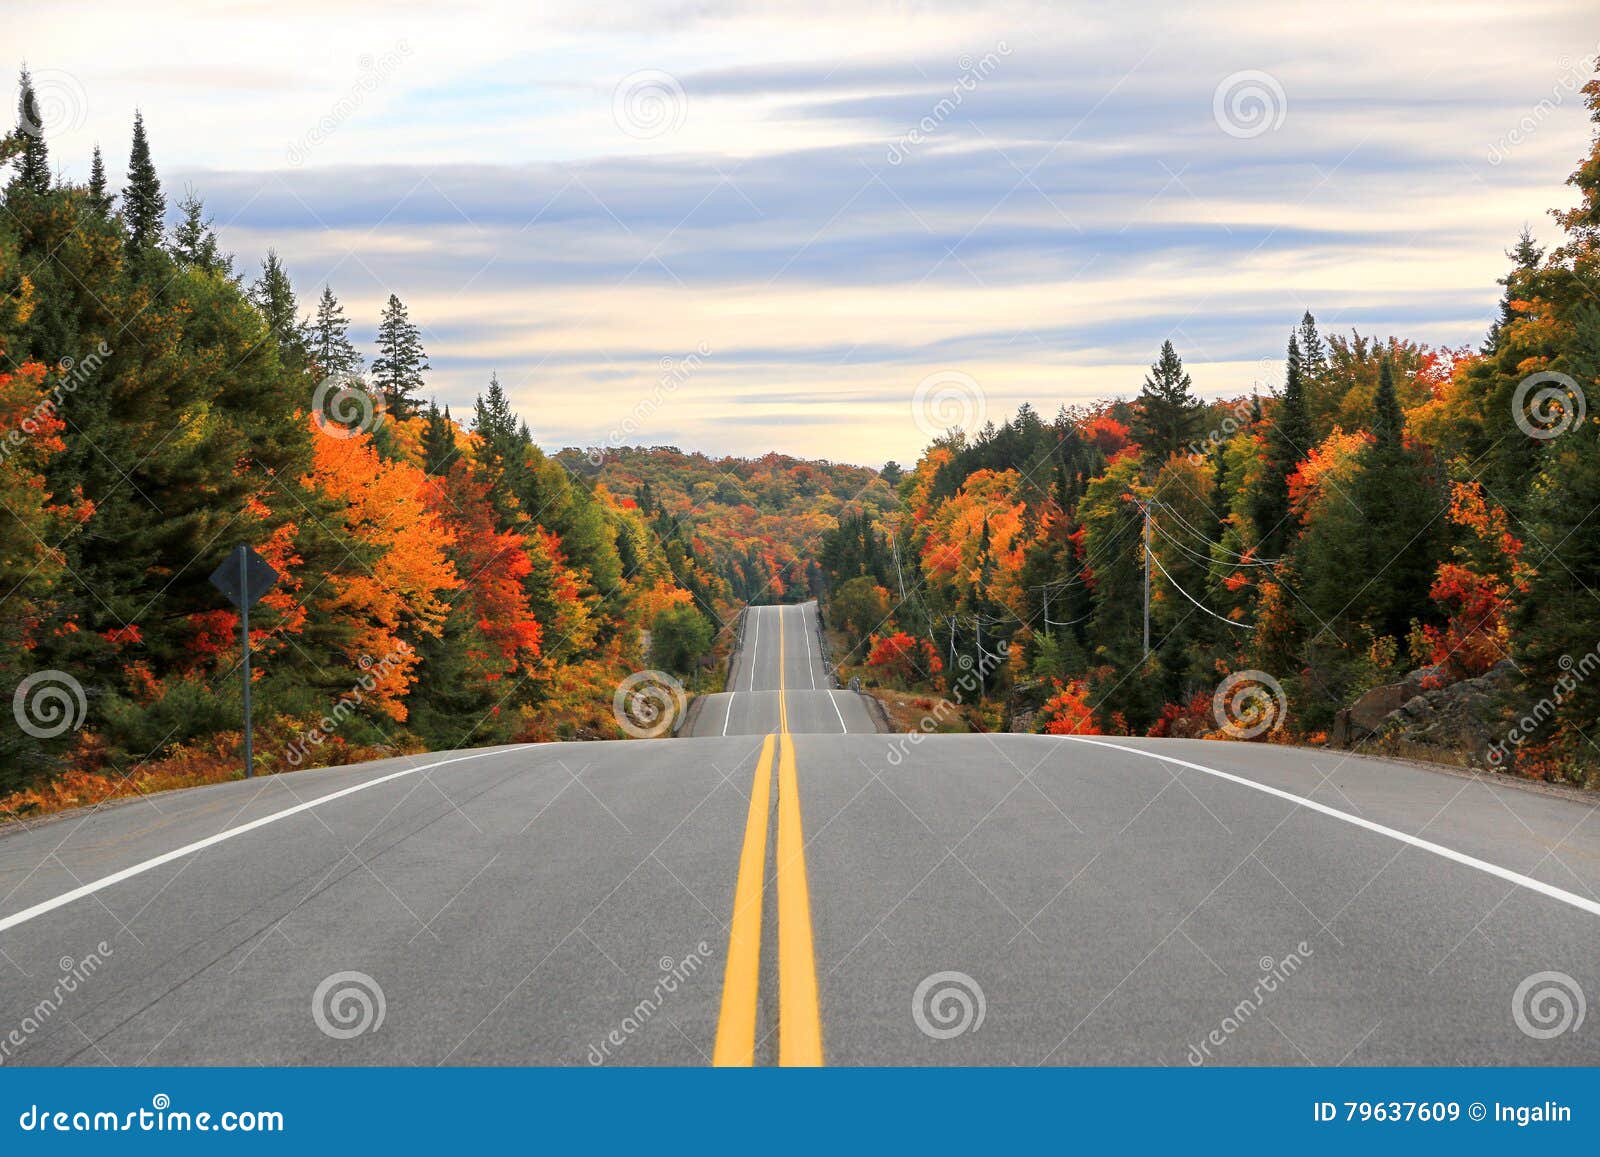 road through algonquin provincial park in fall, ontario, canada